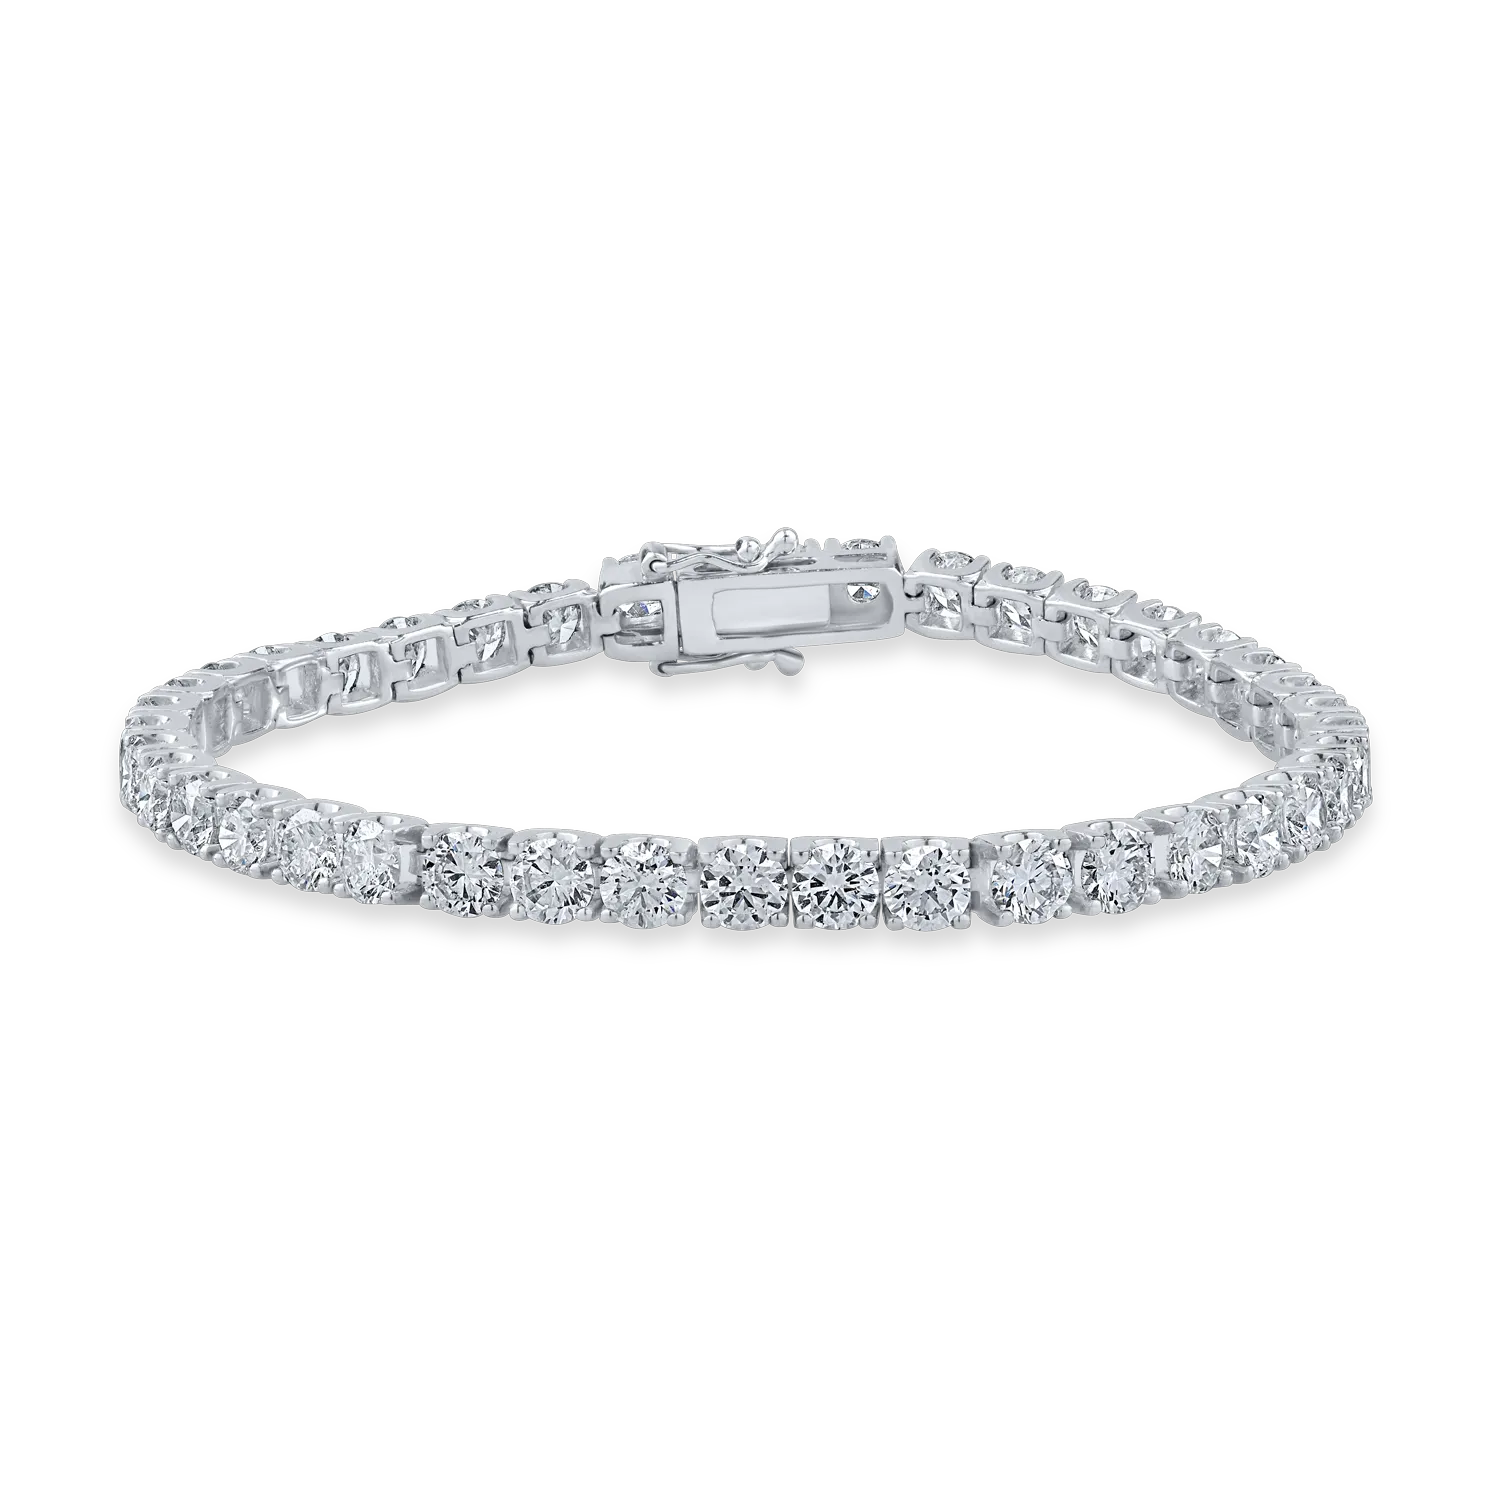 18K white gold tennis bracelet with 10ct diamonds